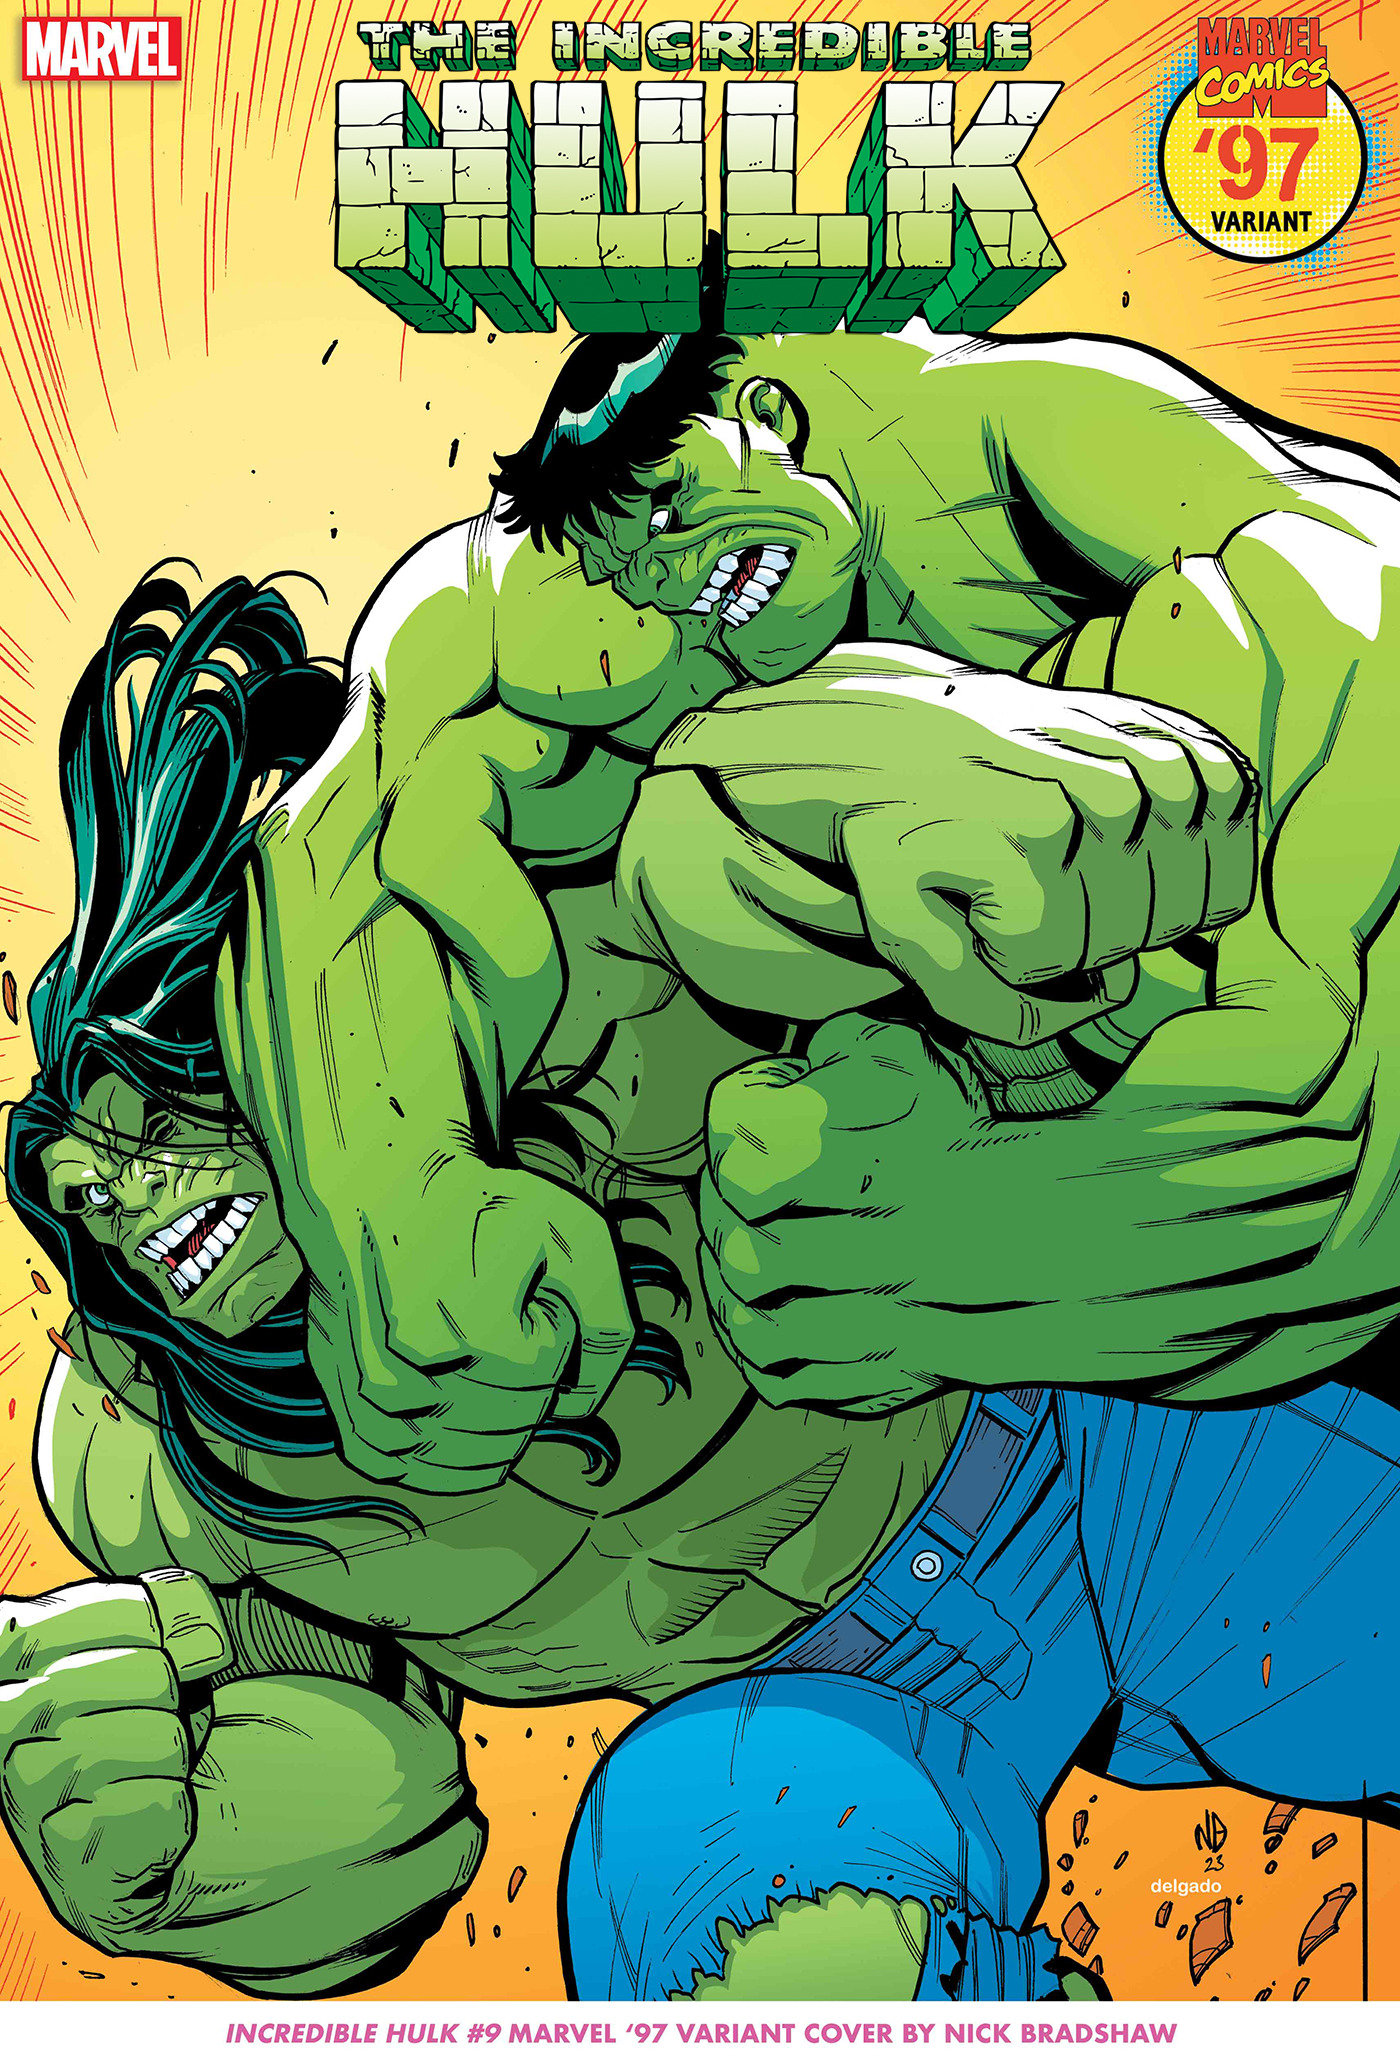 Incredible Hulk #9 Nick Bradshaw Marvel 97 Variant